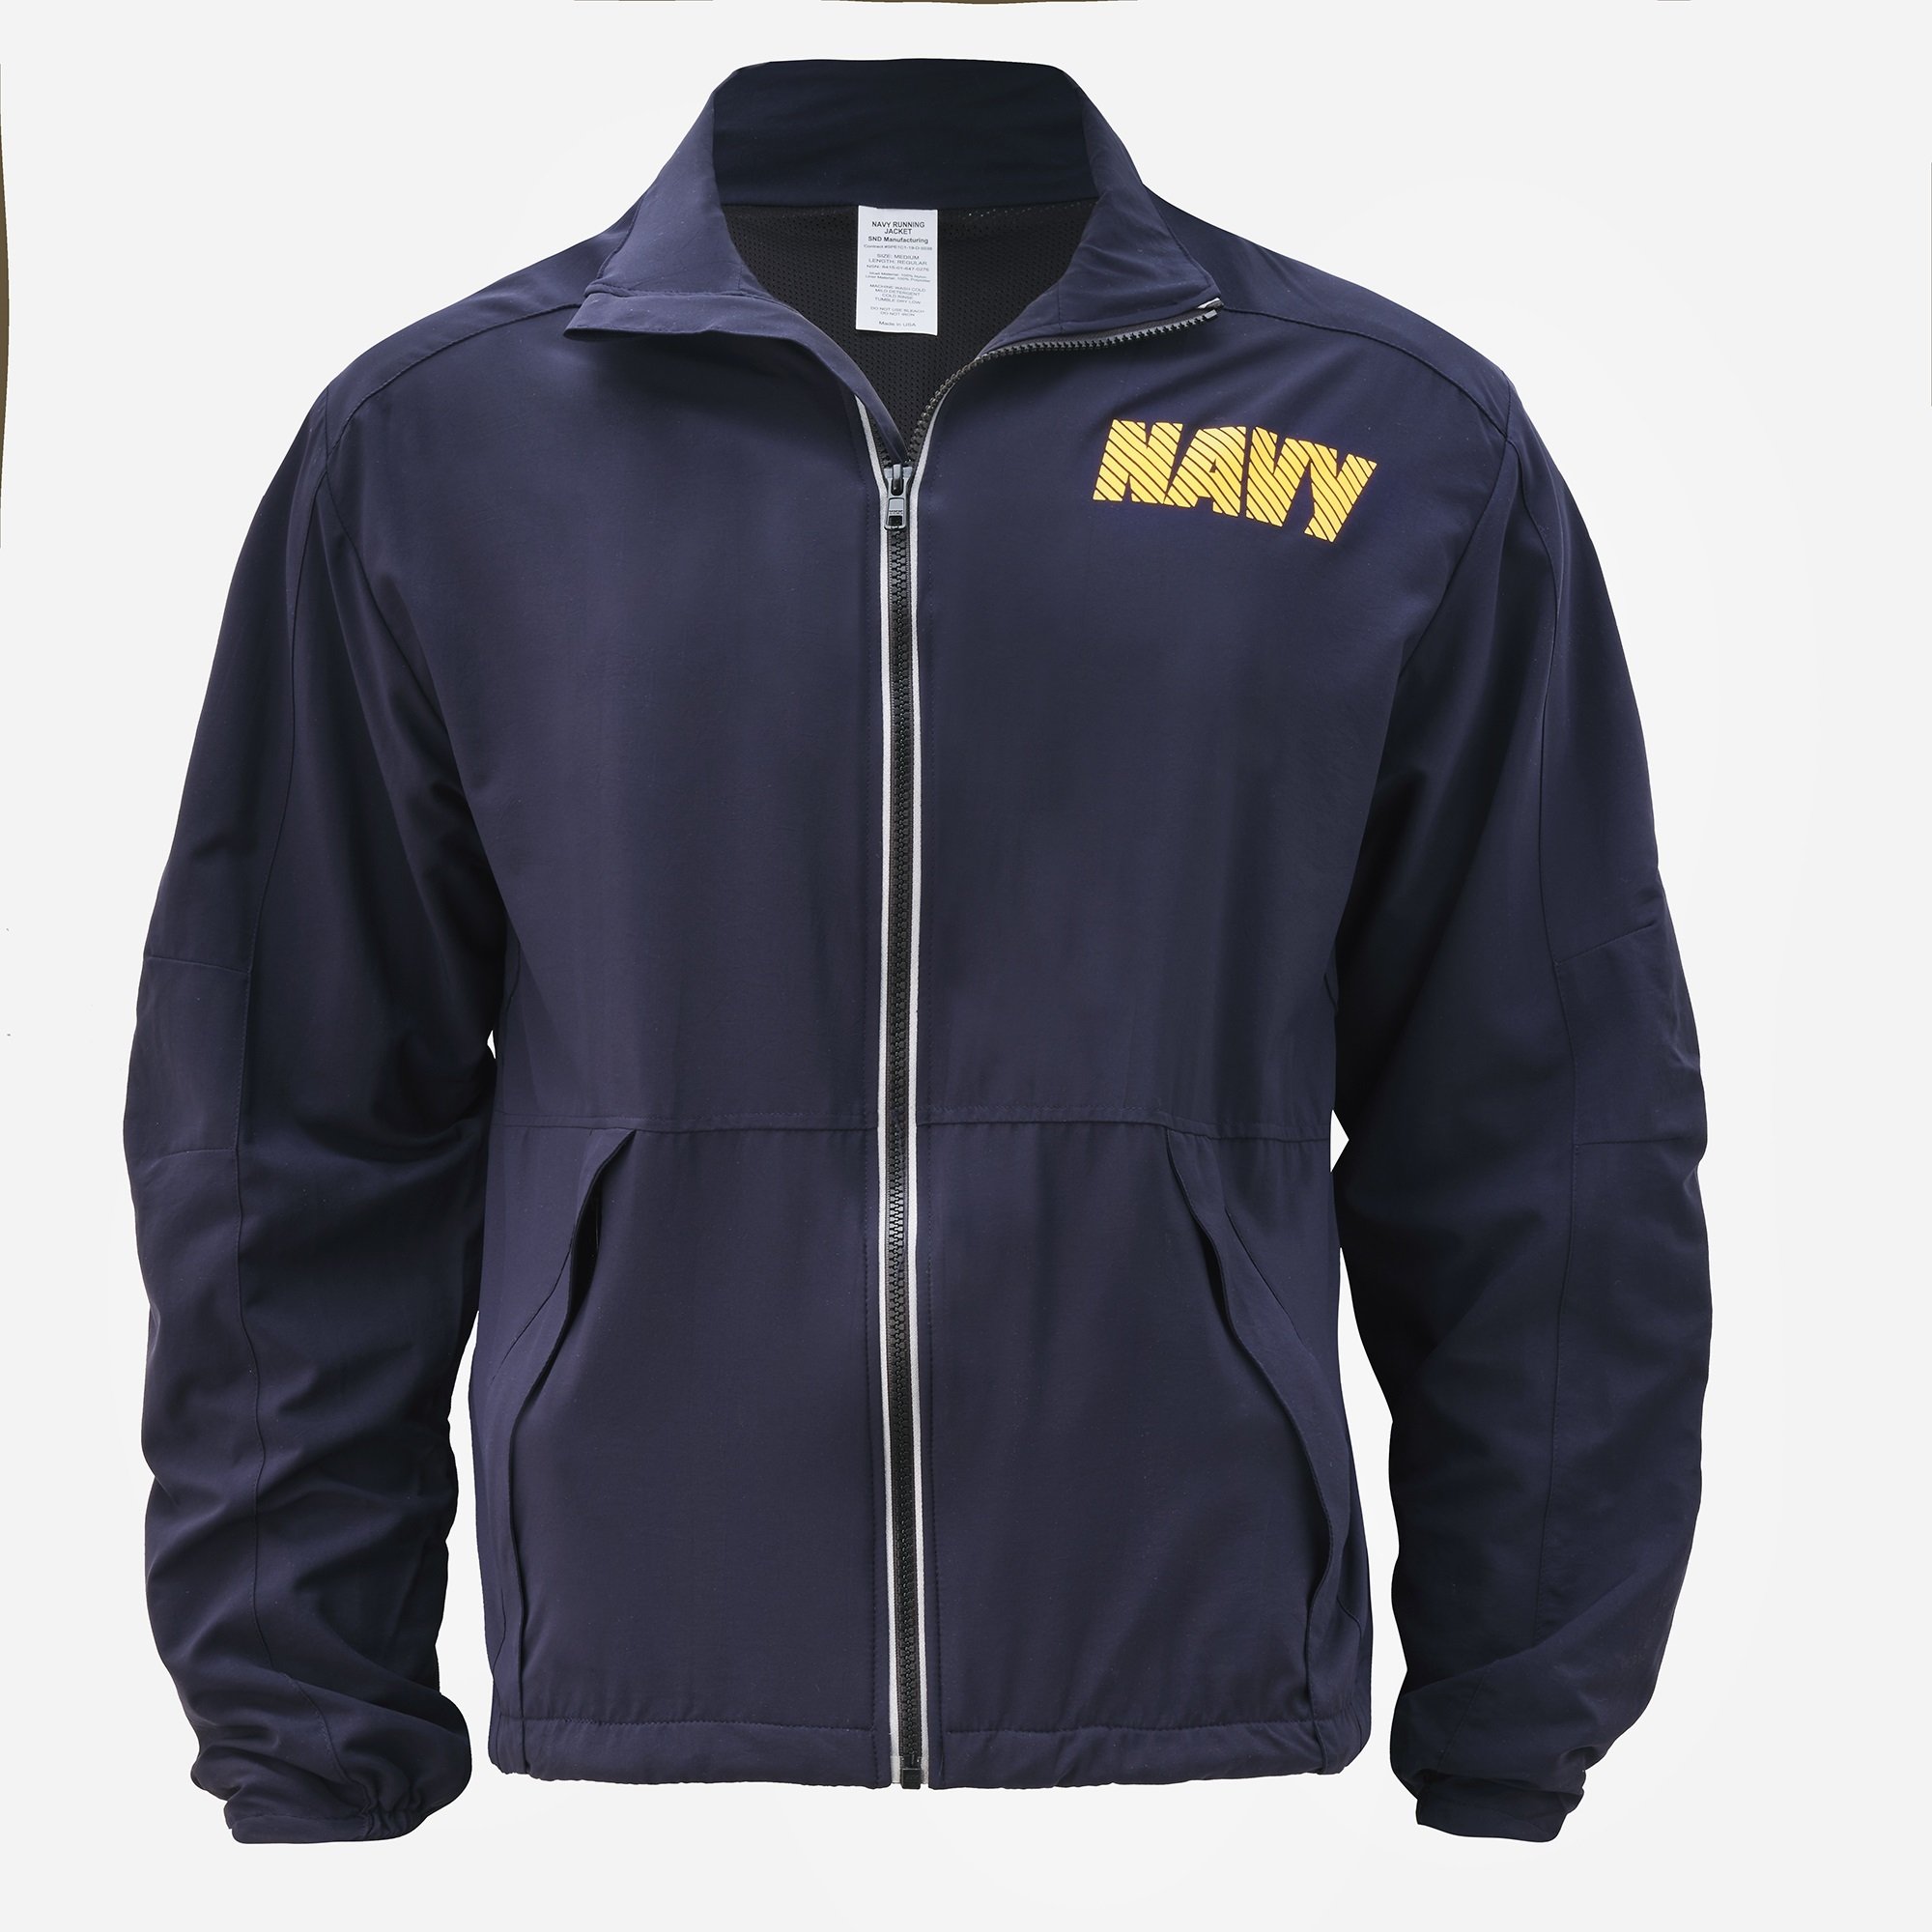 Navy Physical Fitness Jacket | Physical Training Uniforms (ptu ...